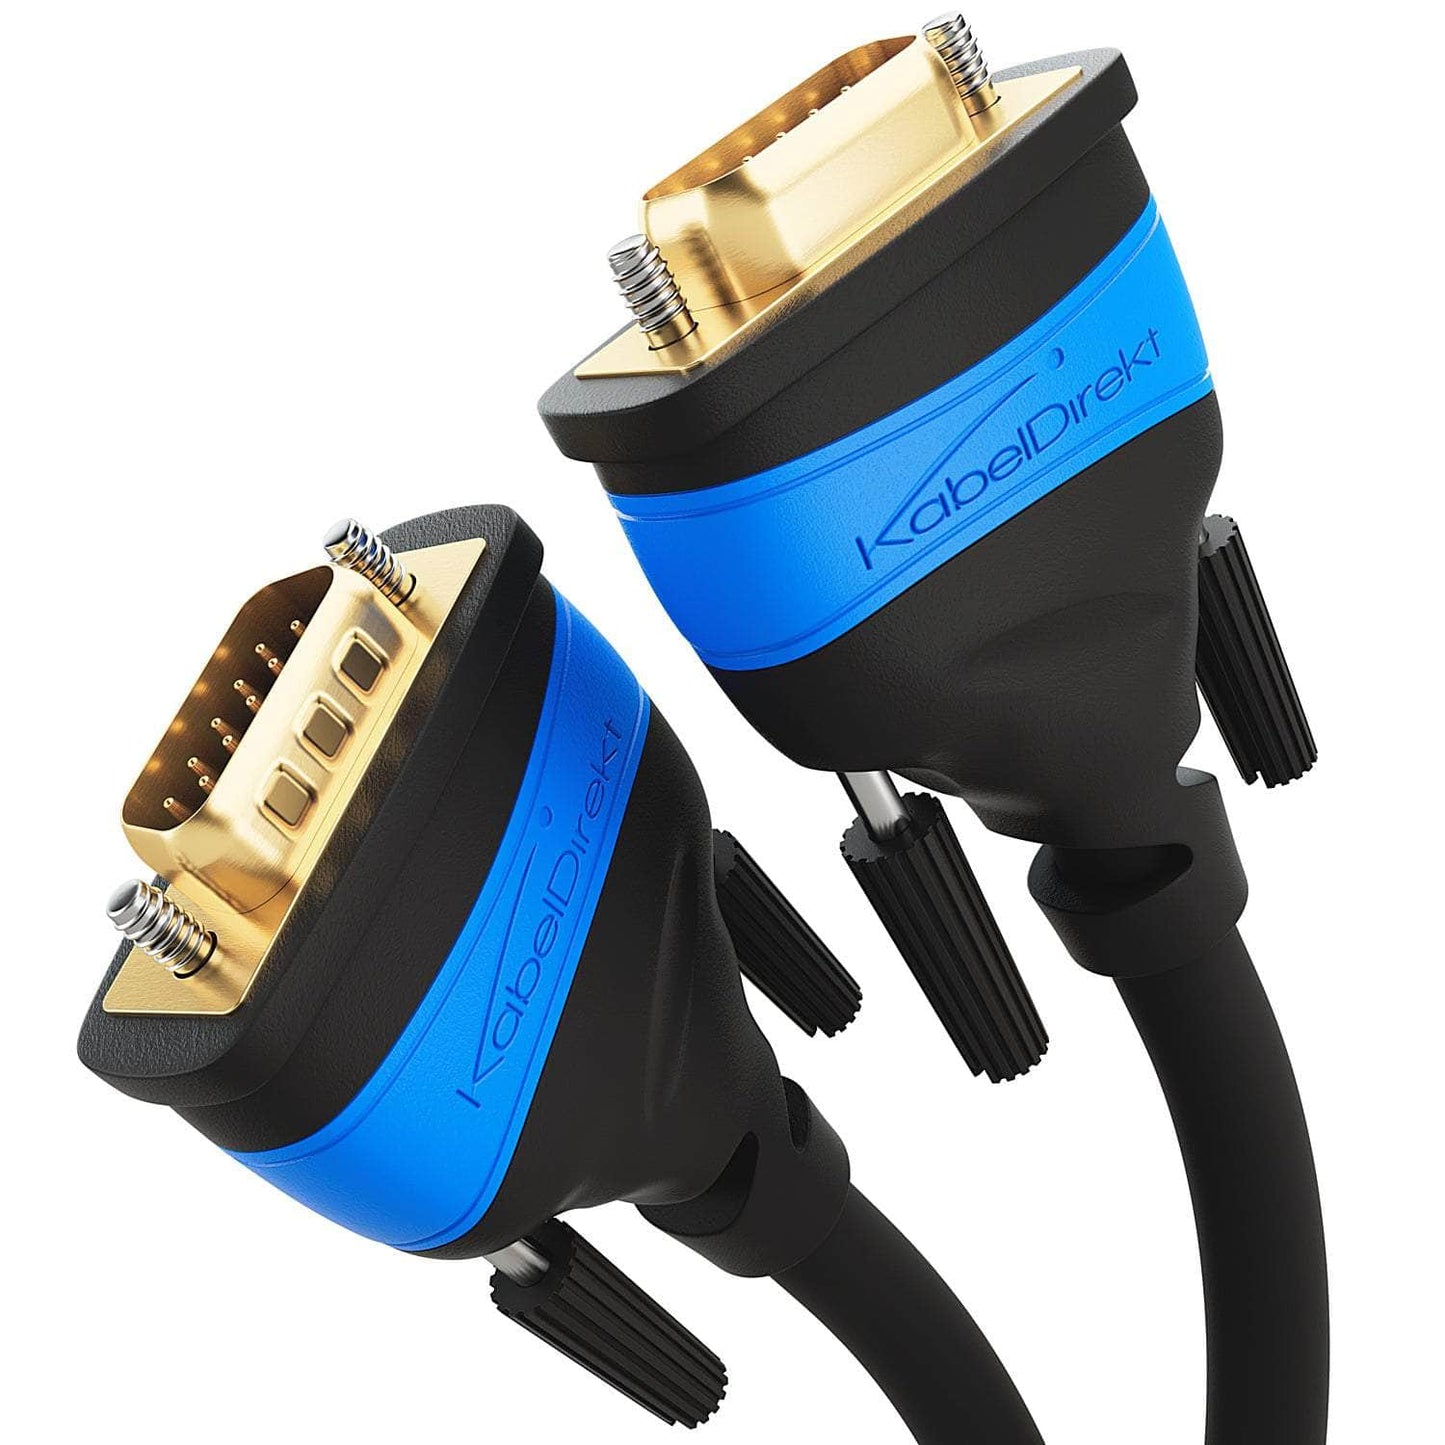 VGA cable - 15-pin, Full HD/1080p, 3D capable, VGA male to VGA male, black